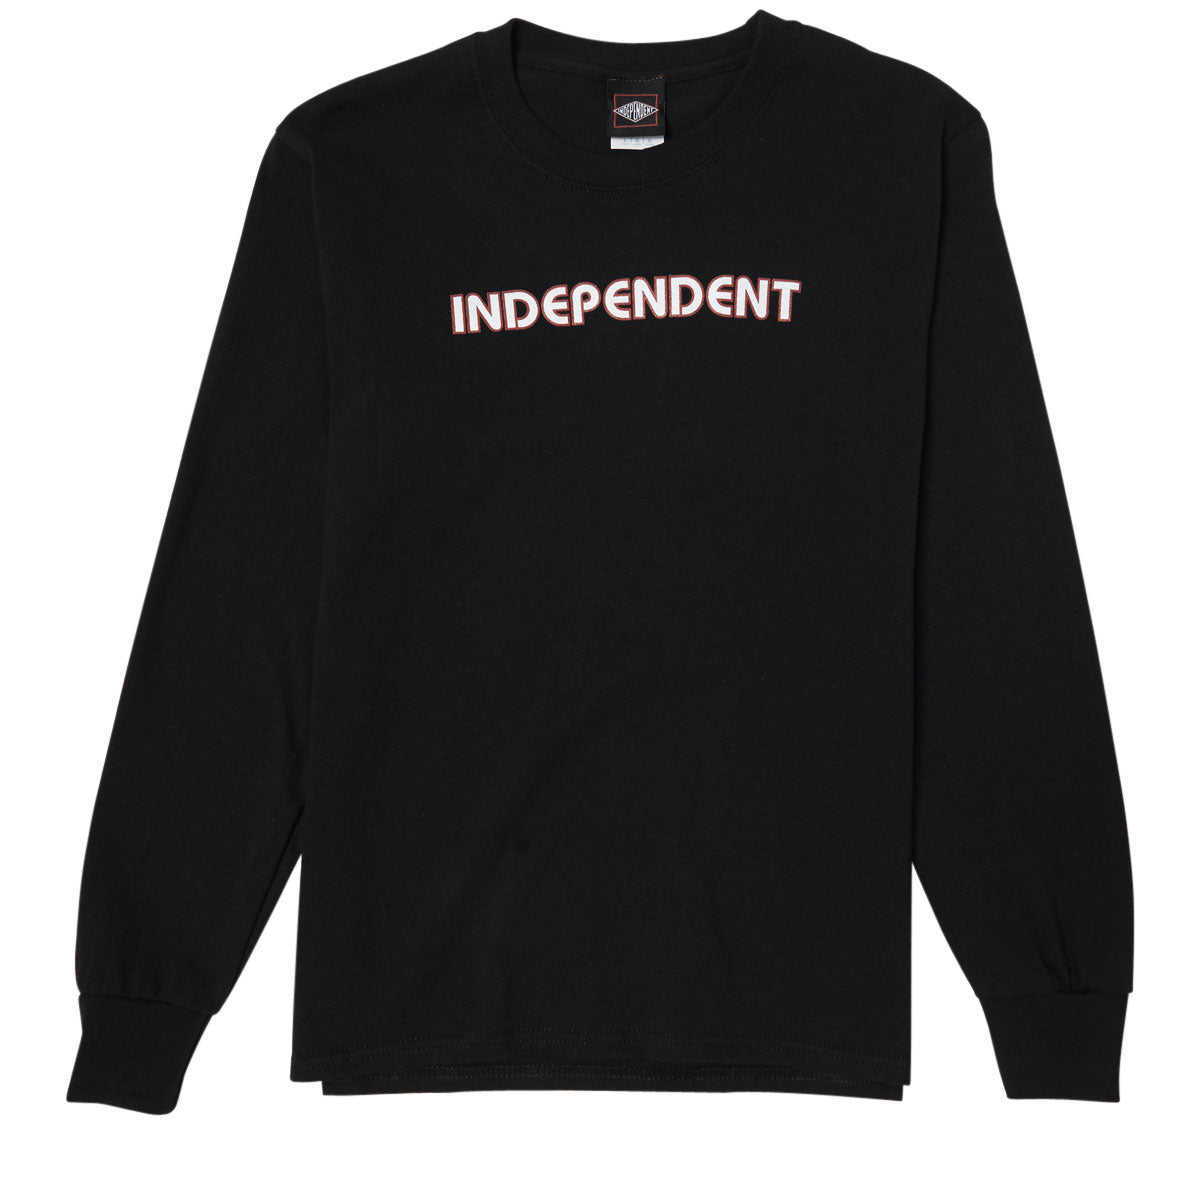 Independent Bauhaus Long Sleeve T-Shirt - Black image 1